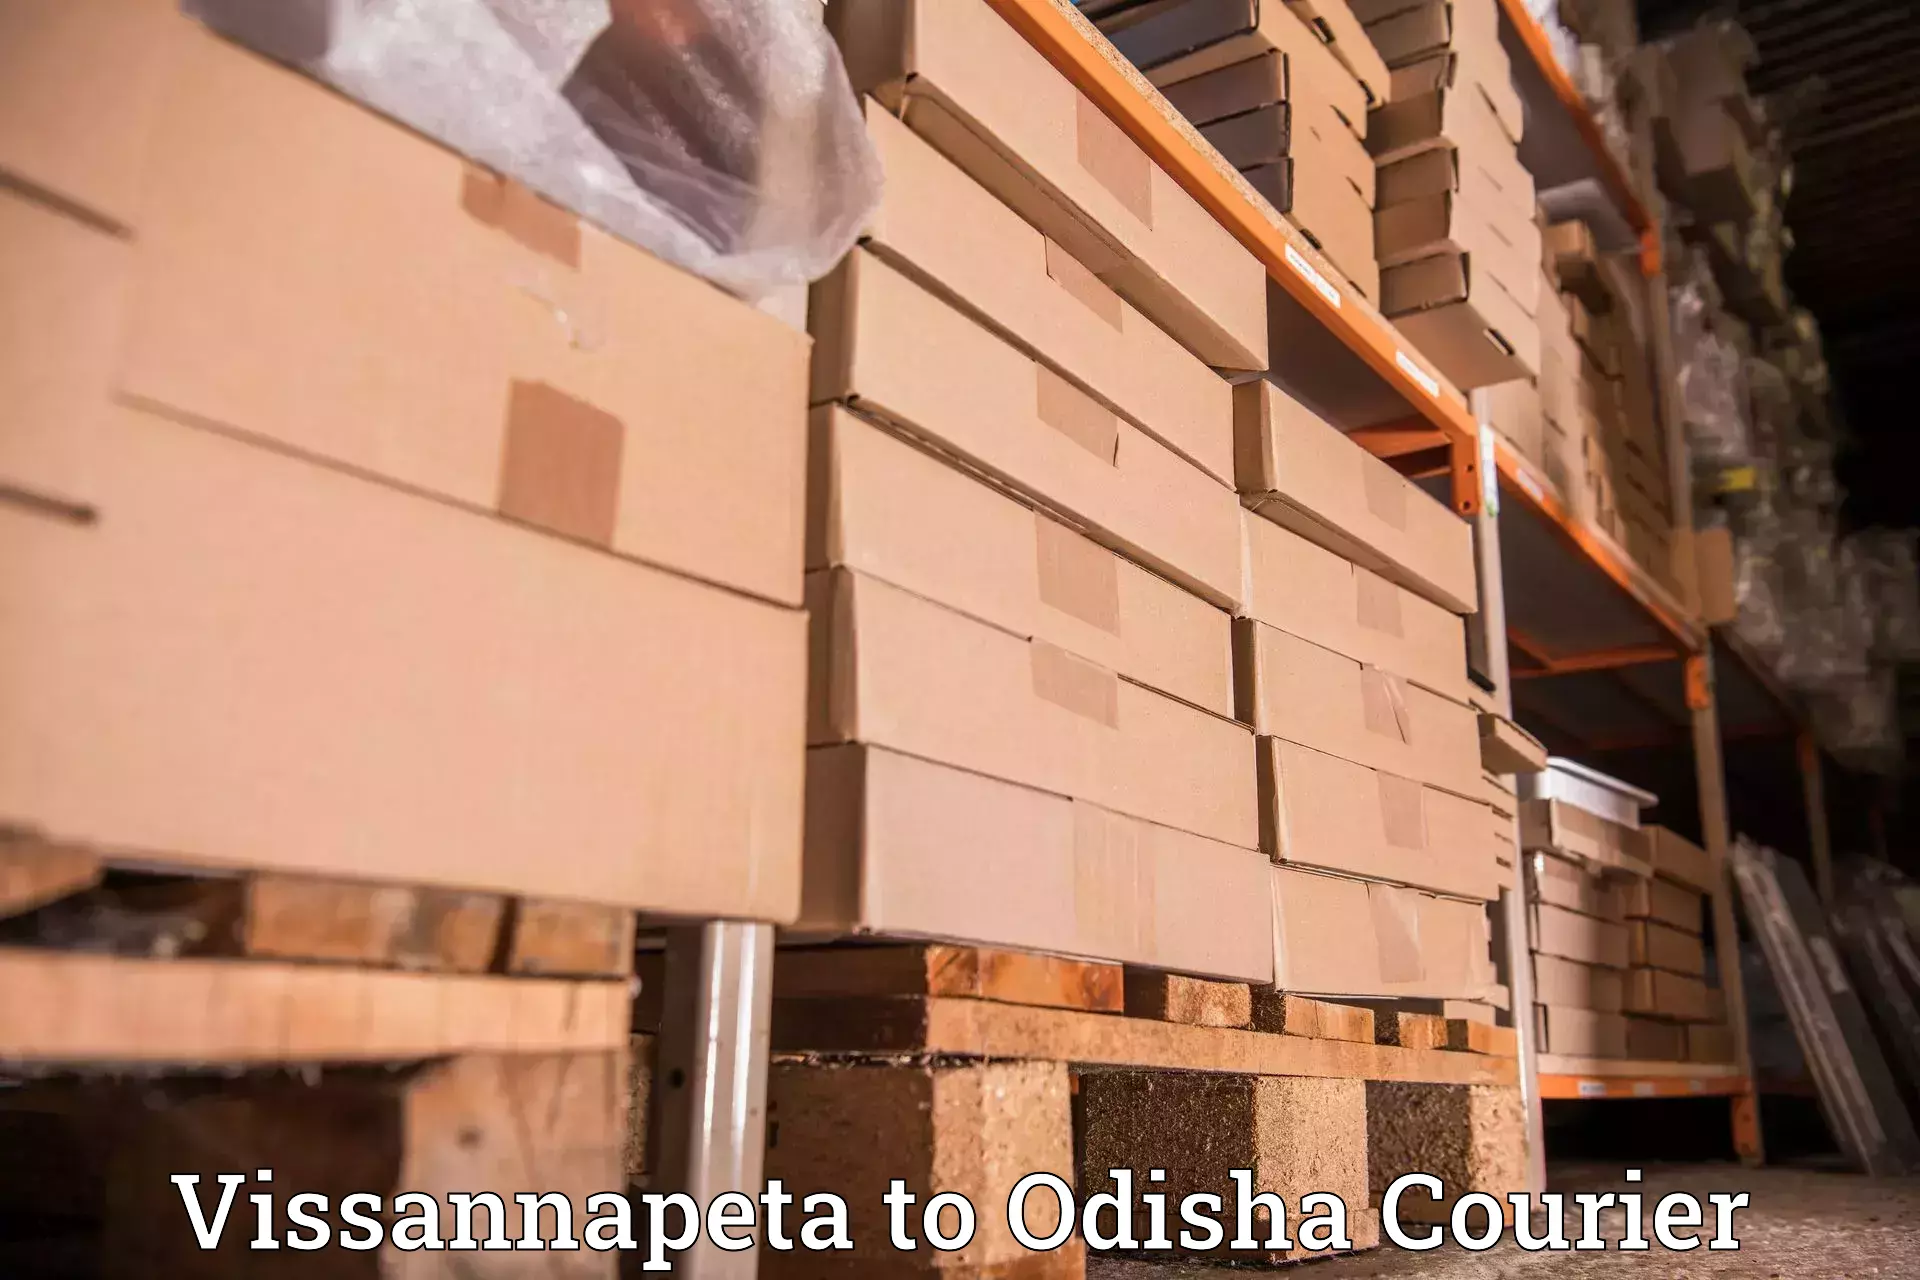 Courier service comparison in Vissannapeta to Baisinga